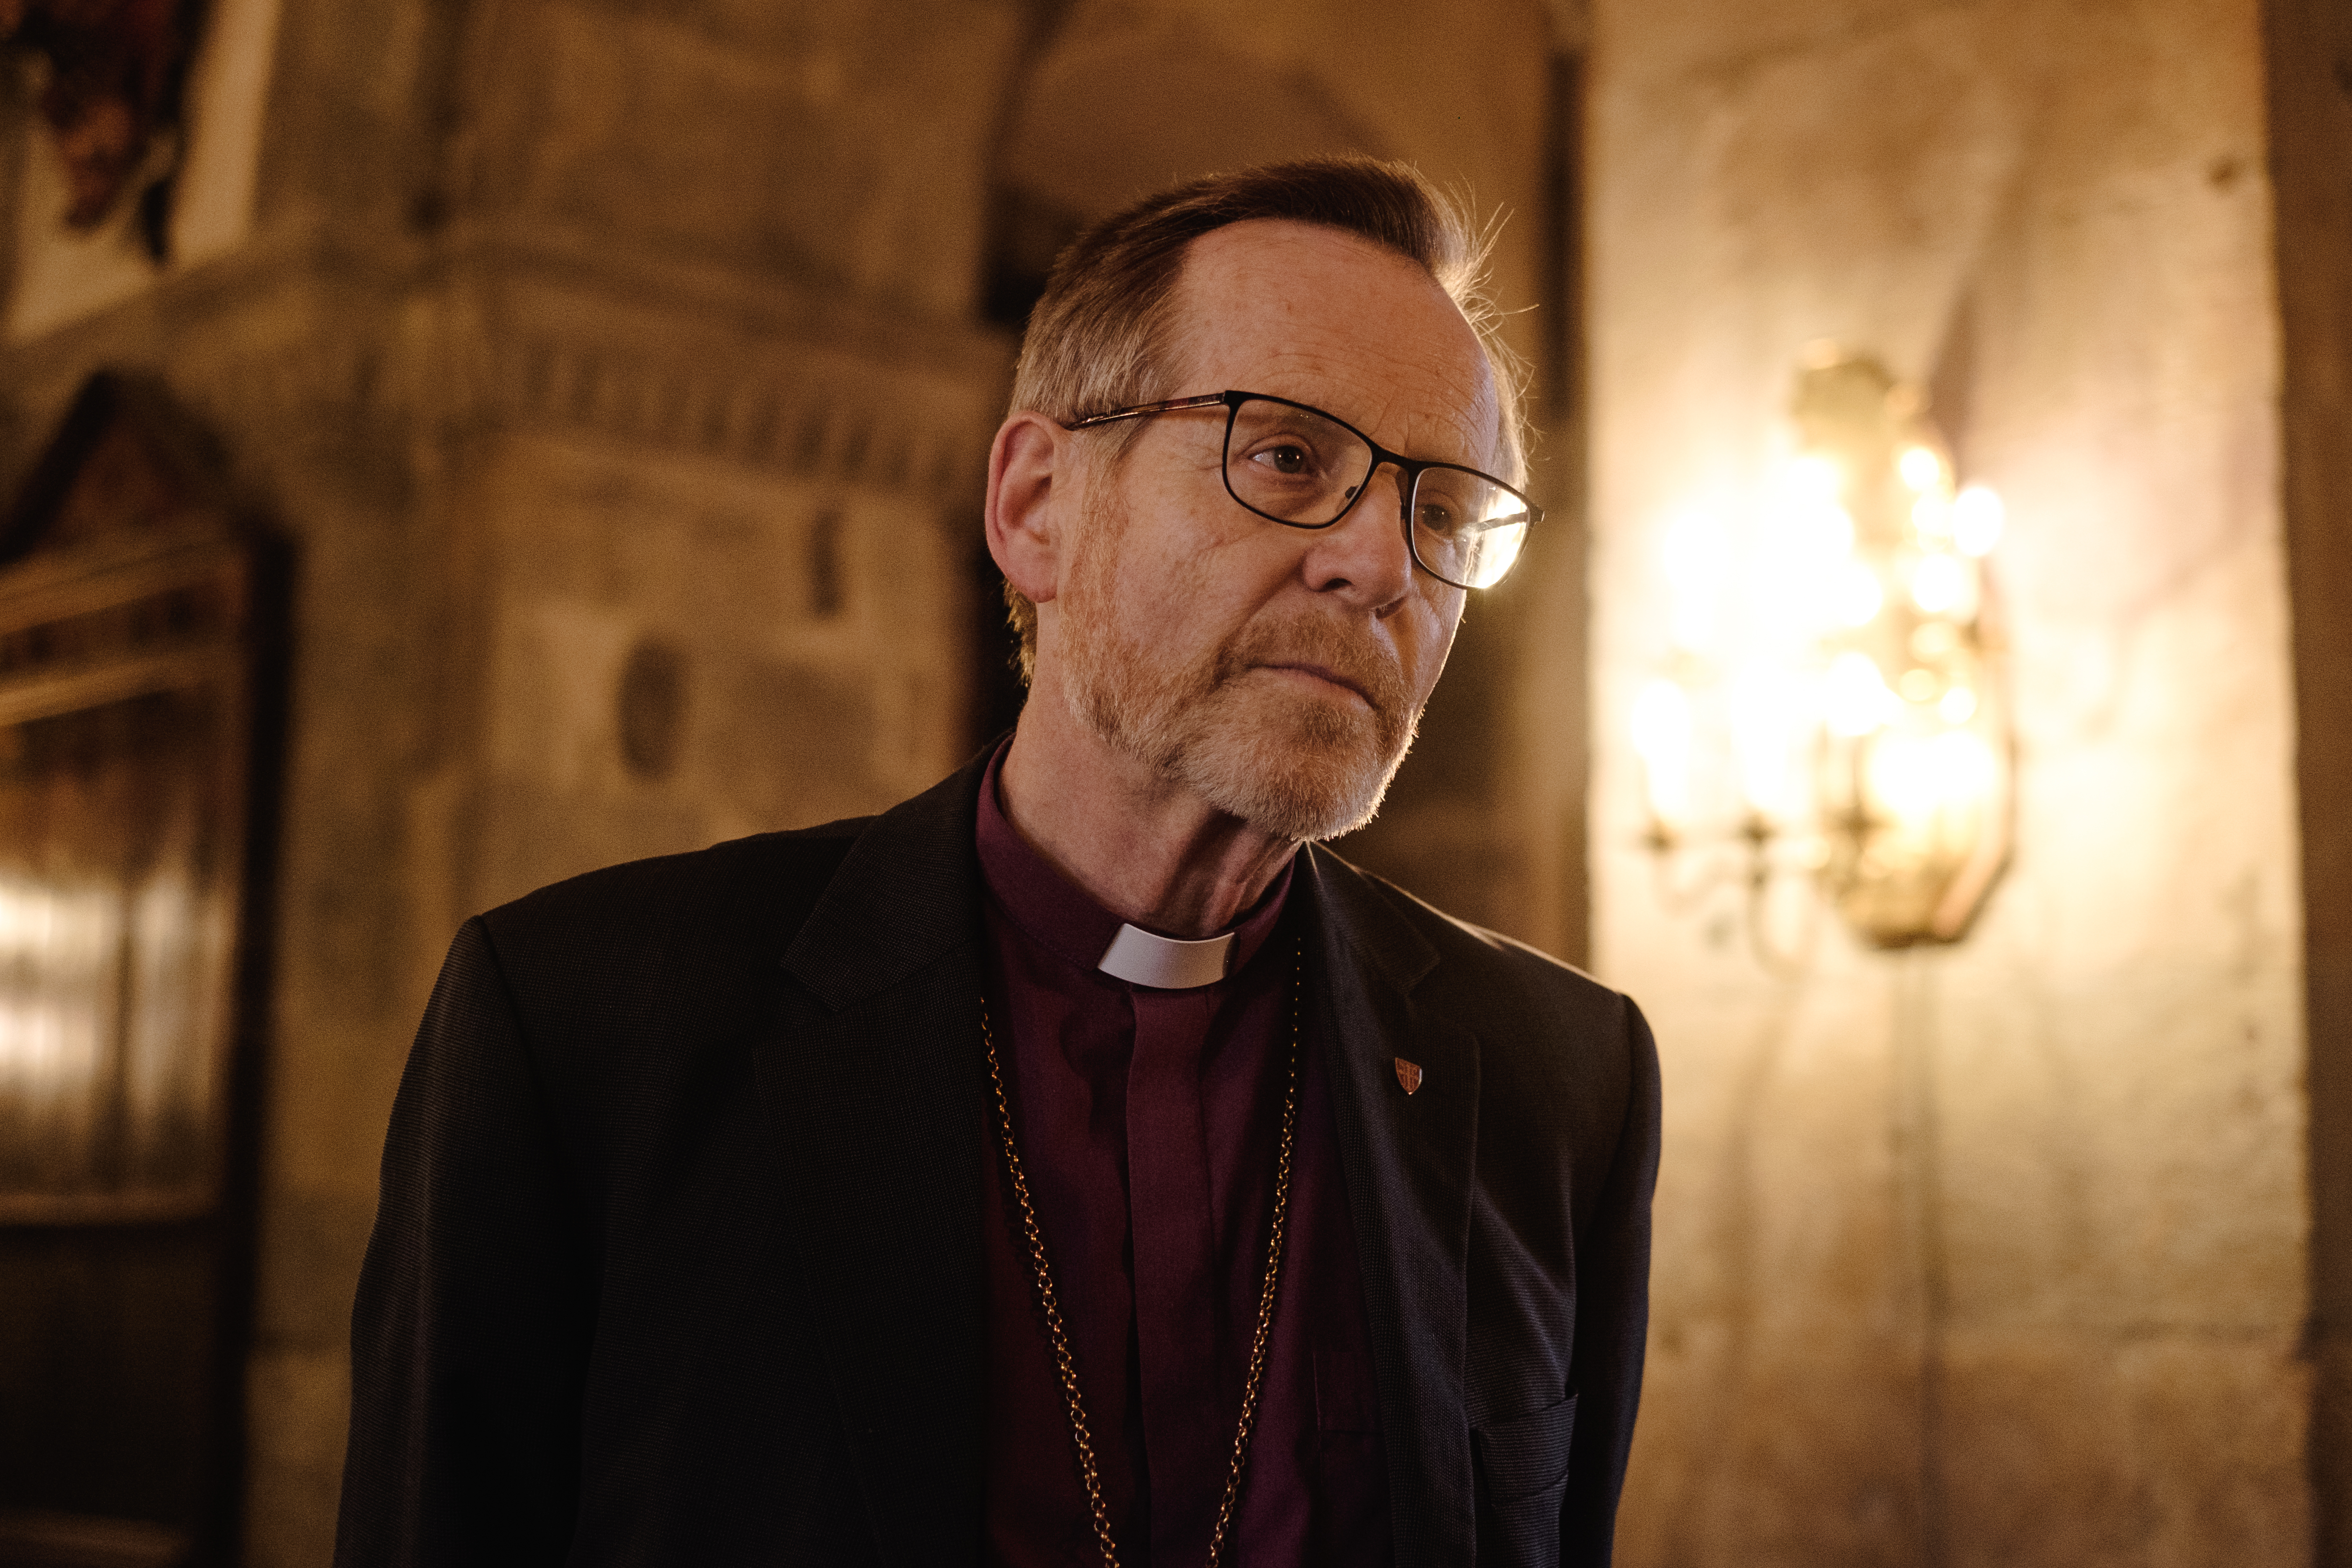 Biskop Halvor Nordhaug går av med pensjon, Mariakirken 16.11.2022